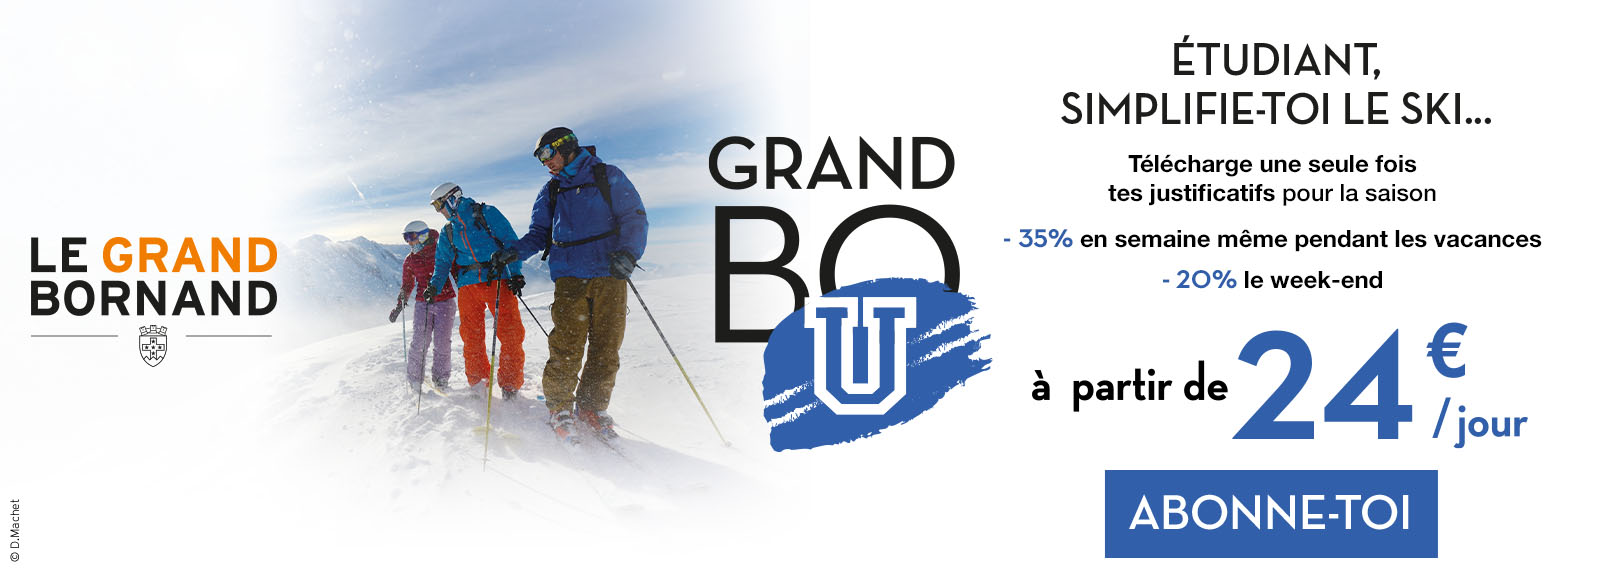 Forfait ski Grand-Bo U